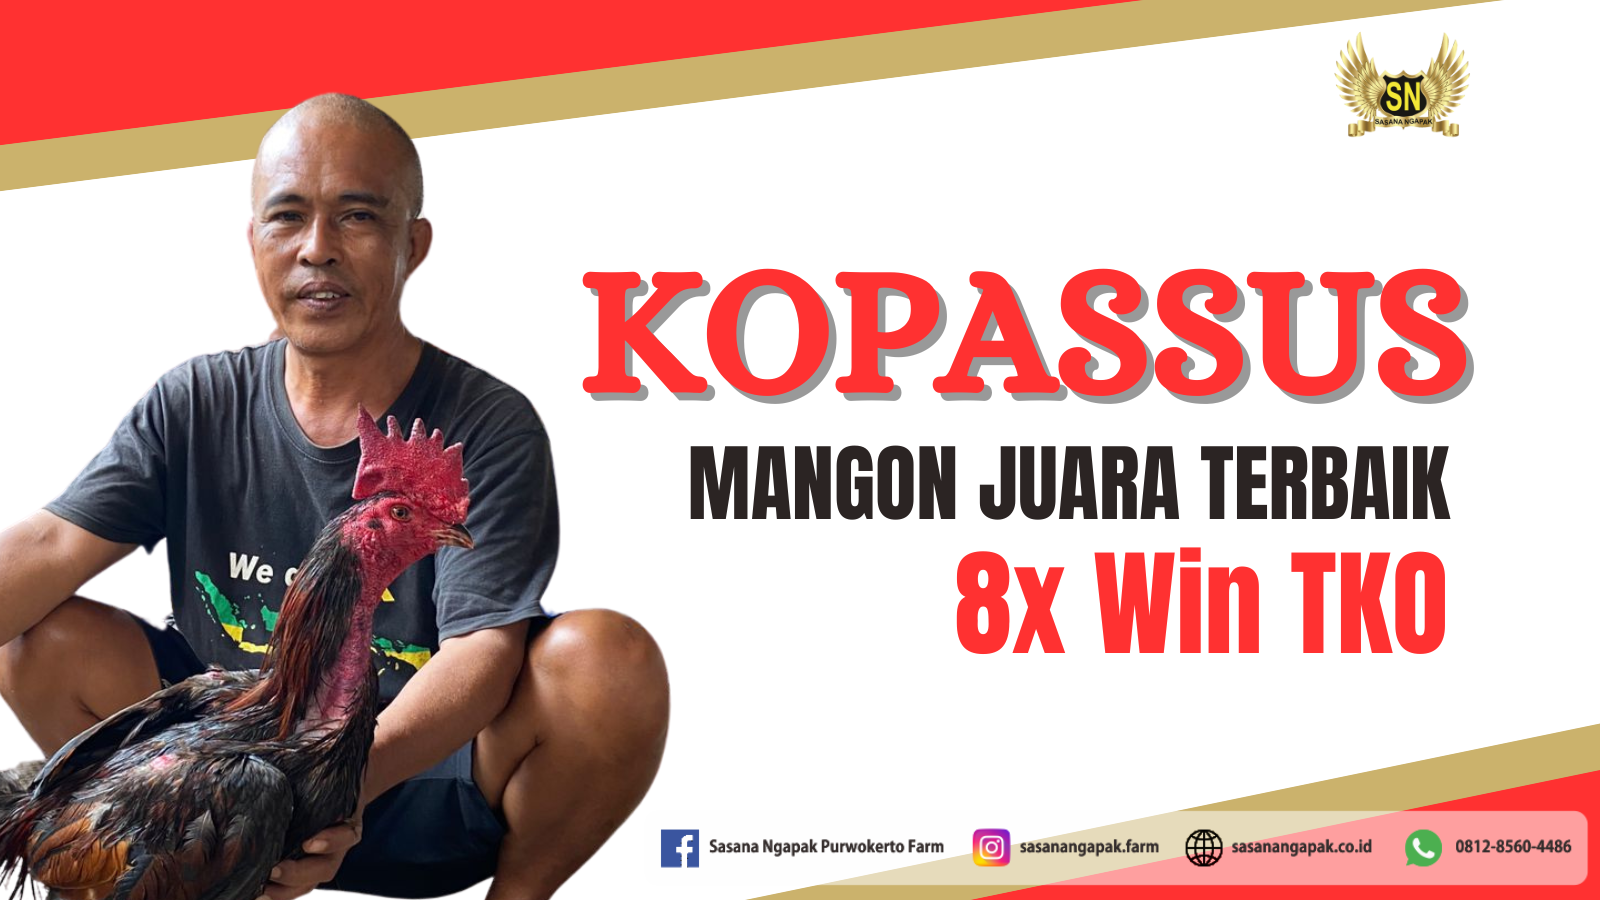 Mangon Juara terbaik tahun 2023 : KOPASSUS.. 8X WINS selalu TKO